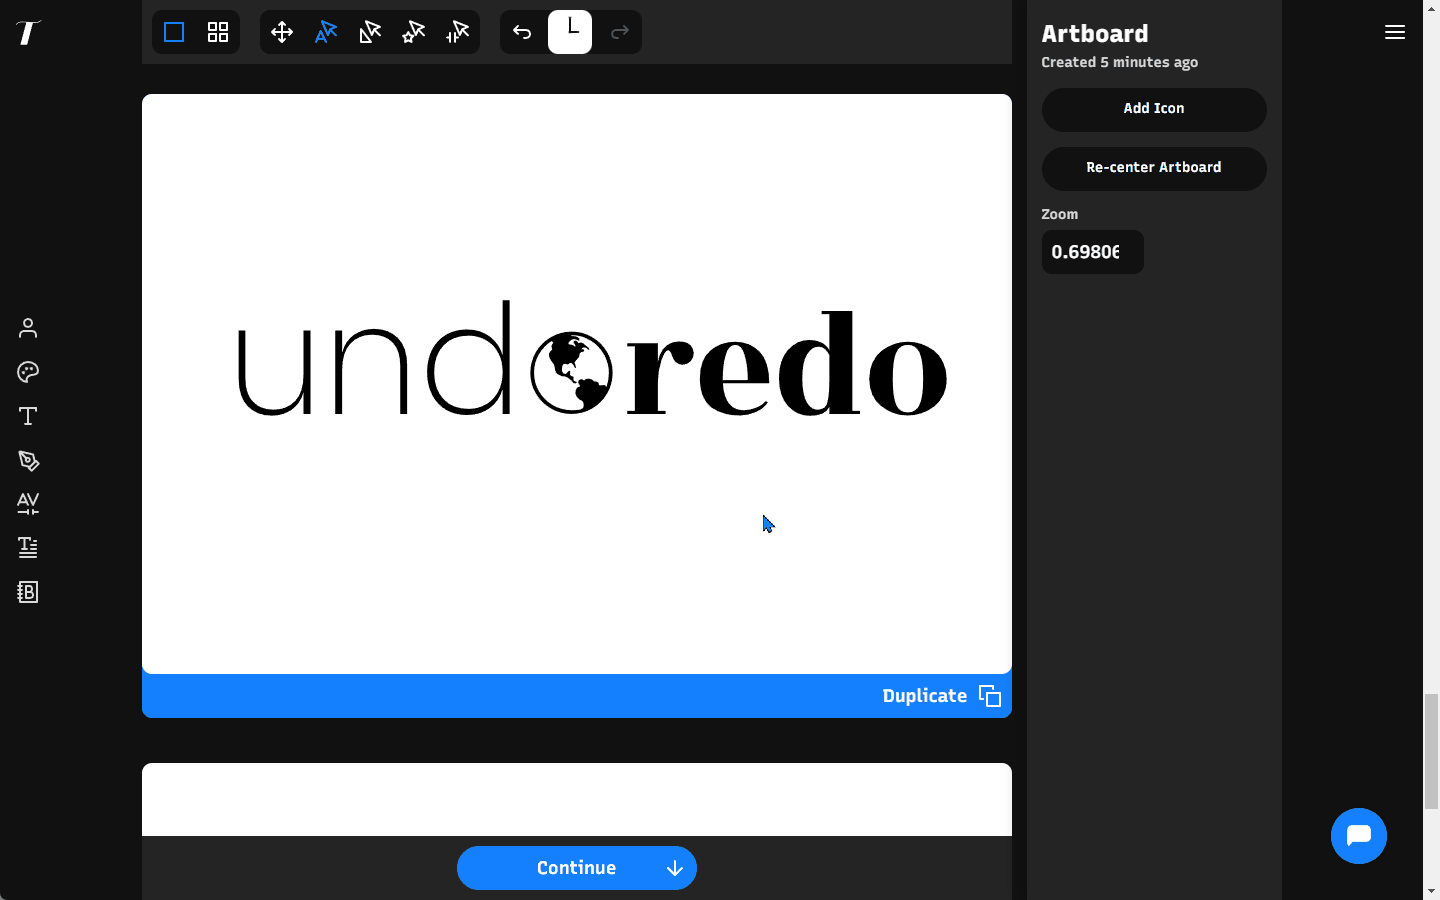 Undo/Redo in action inside the logo editor